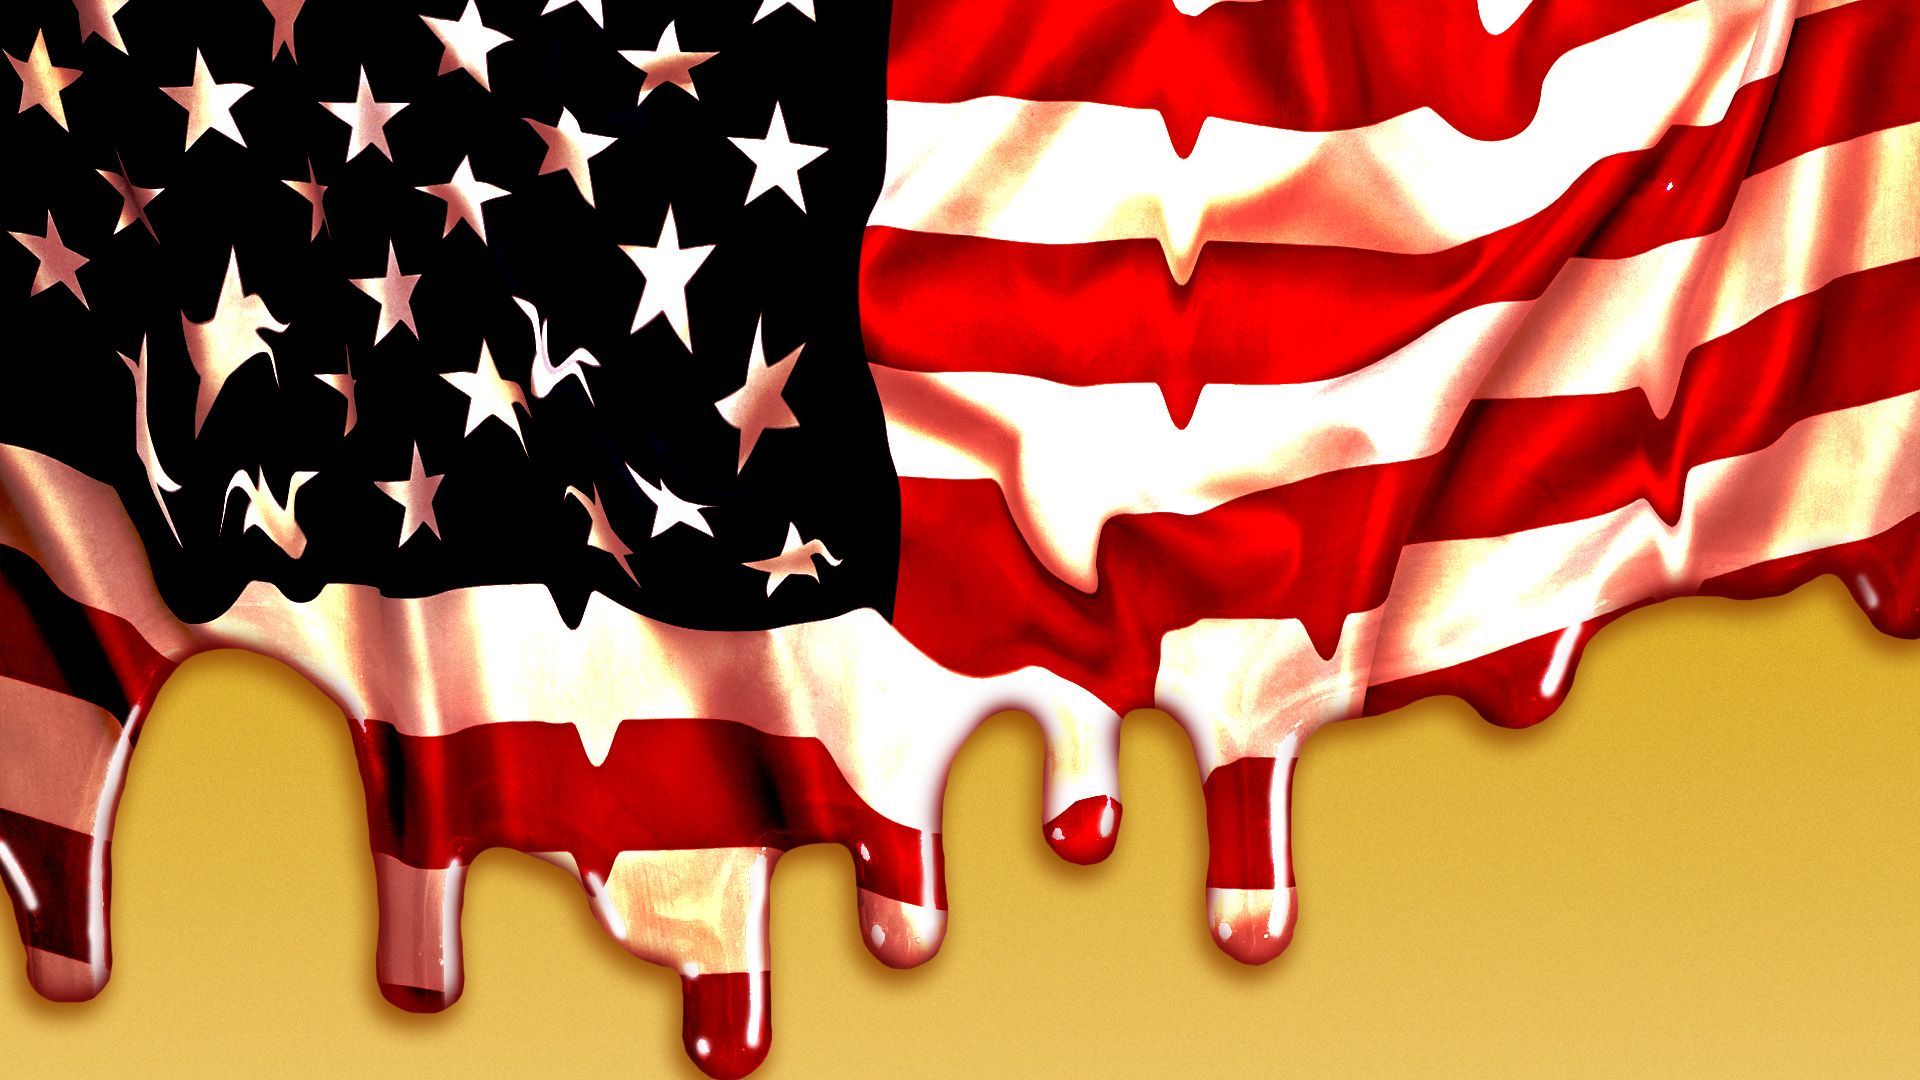 Illustration of a melting American flag